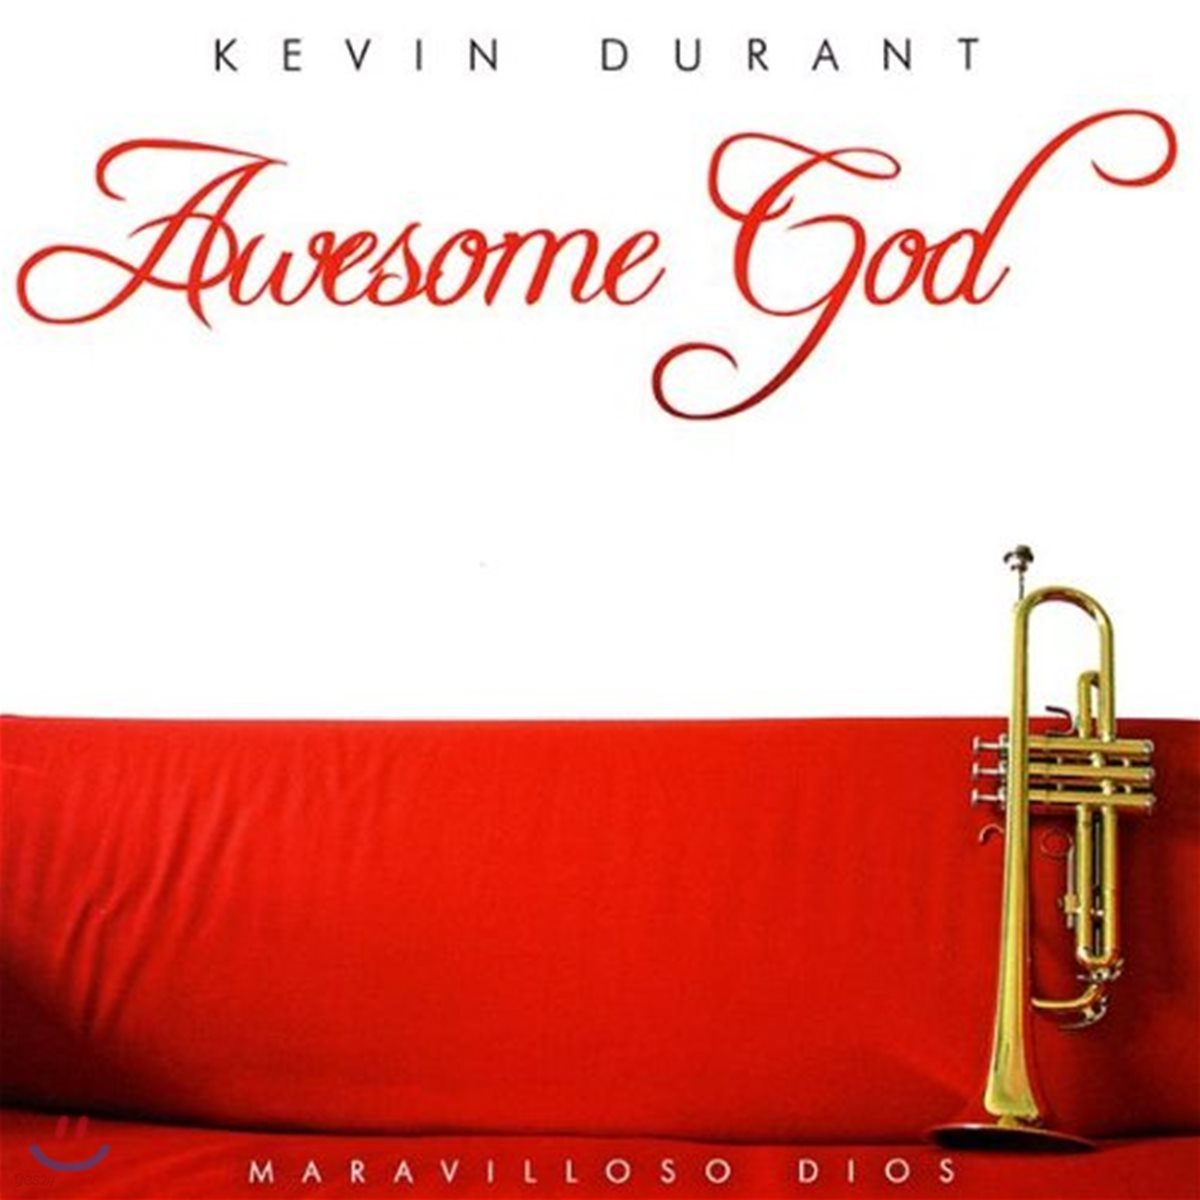 Kevin Durant (케빈 듀란트) - Awesome God 트럼펫으로 연주하는 찬송가와 워십송